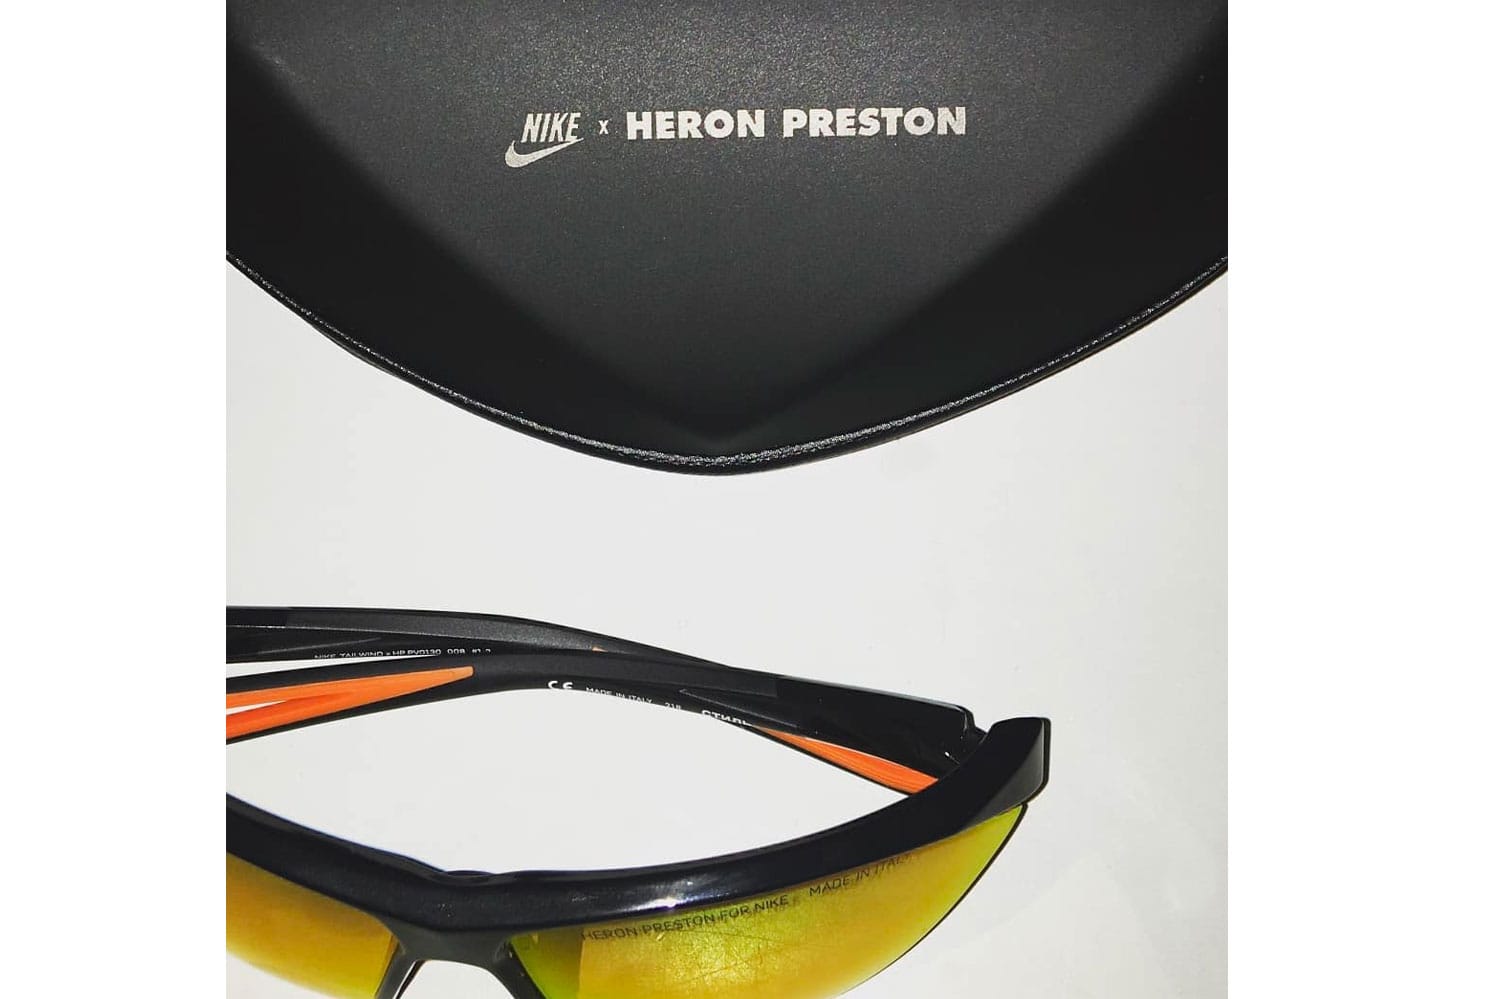 Heron Preston x Nike による初のコラボアイテ 